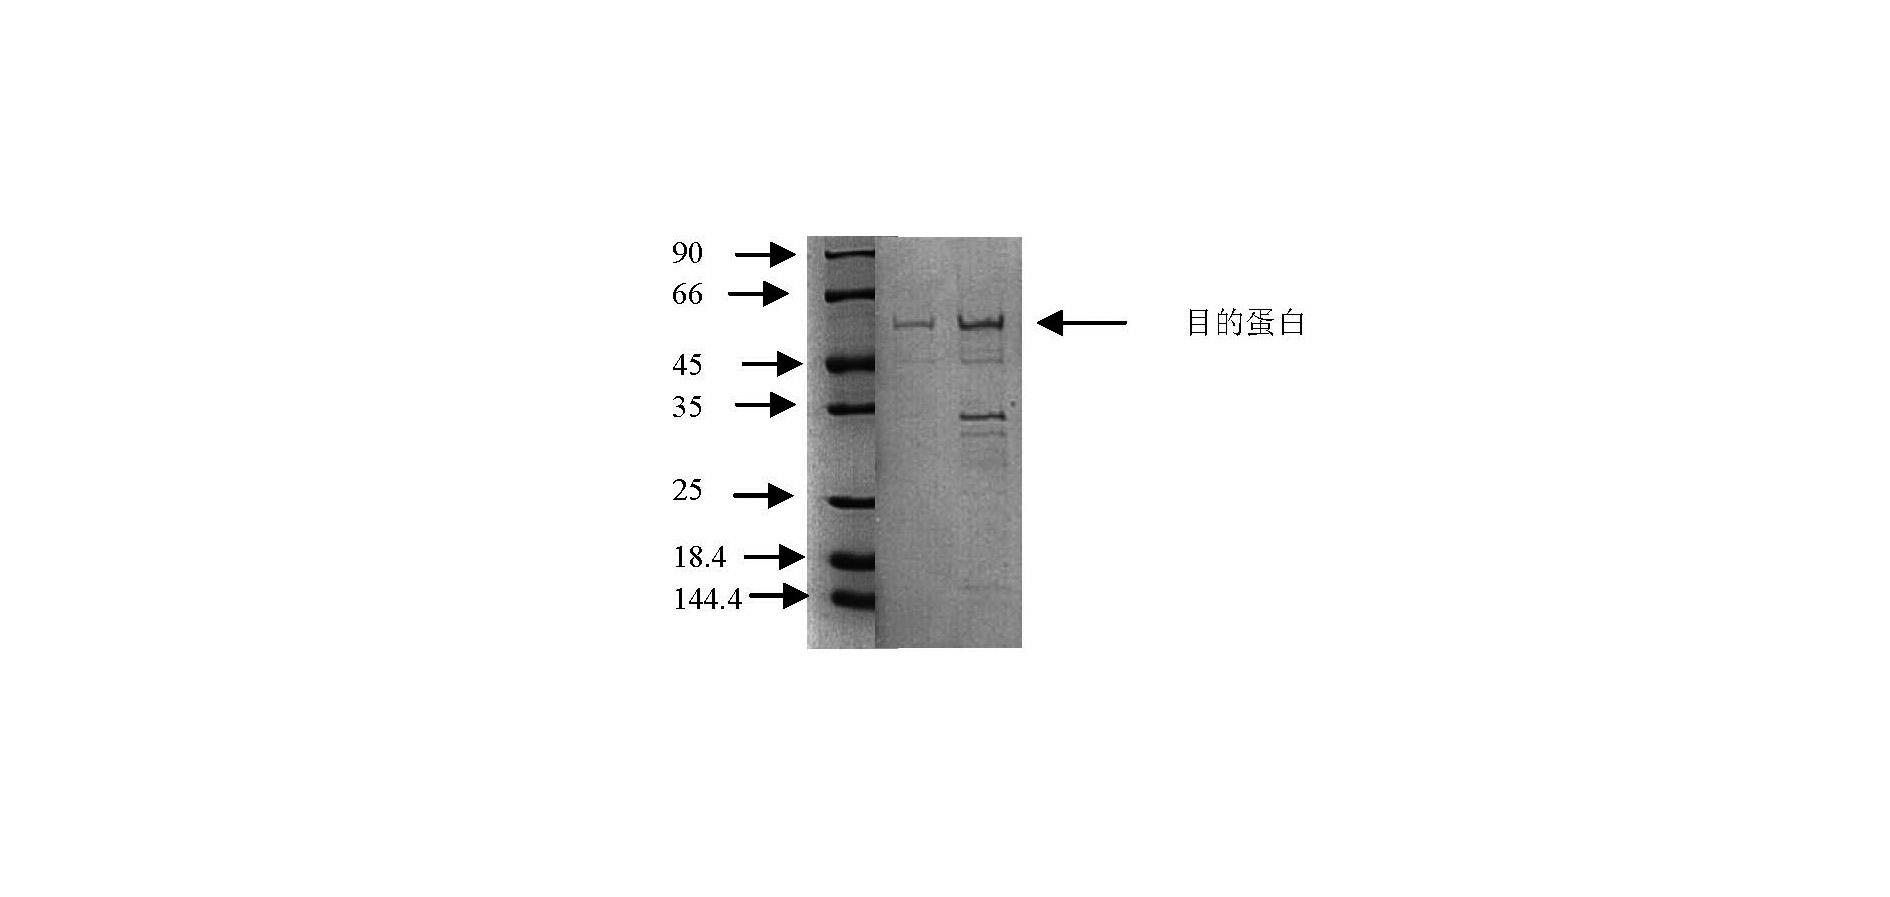 Large yellow croaker interleukin-1beta (IL-1beta) gene cloning method and application thereof